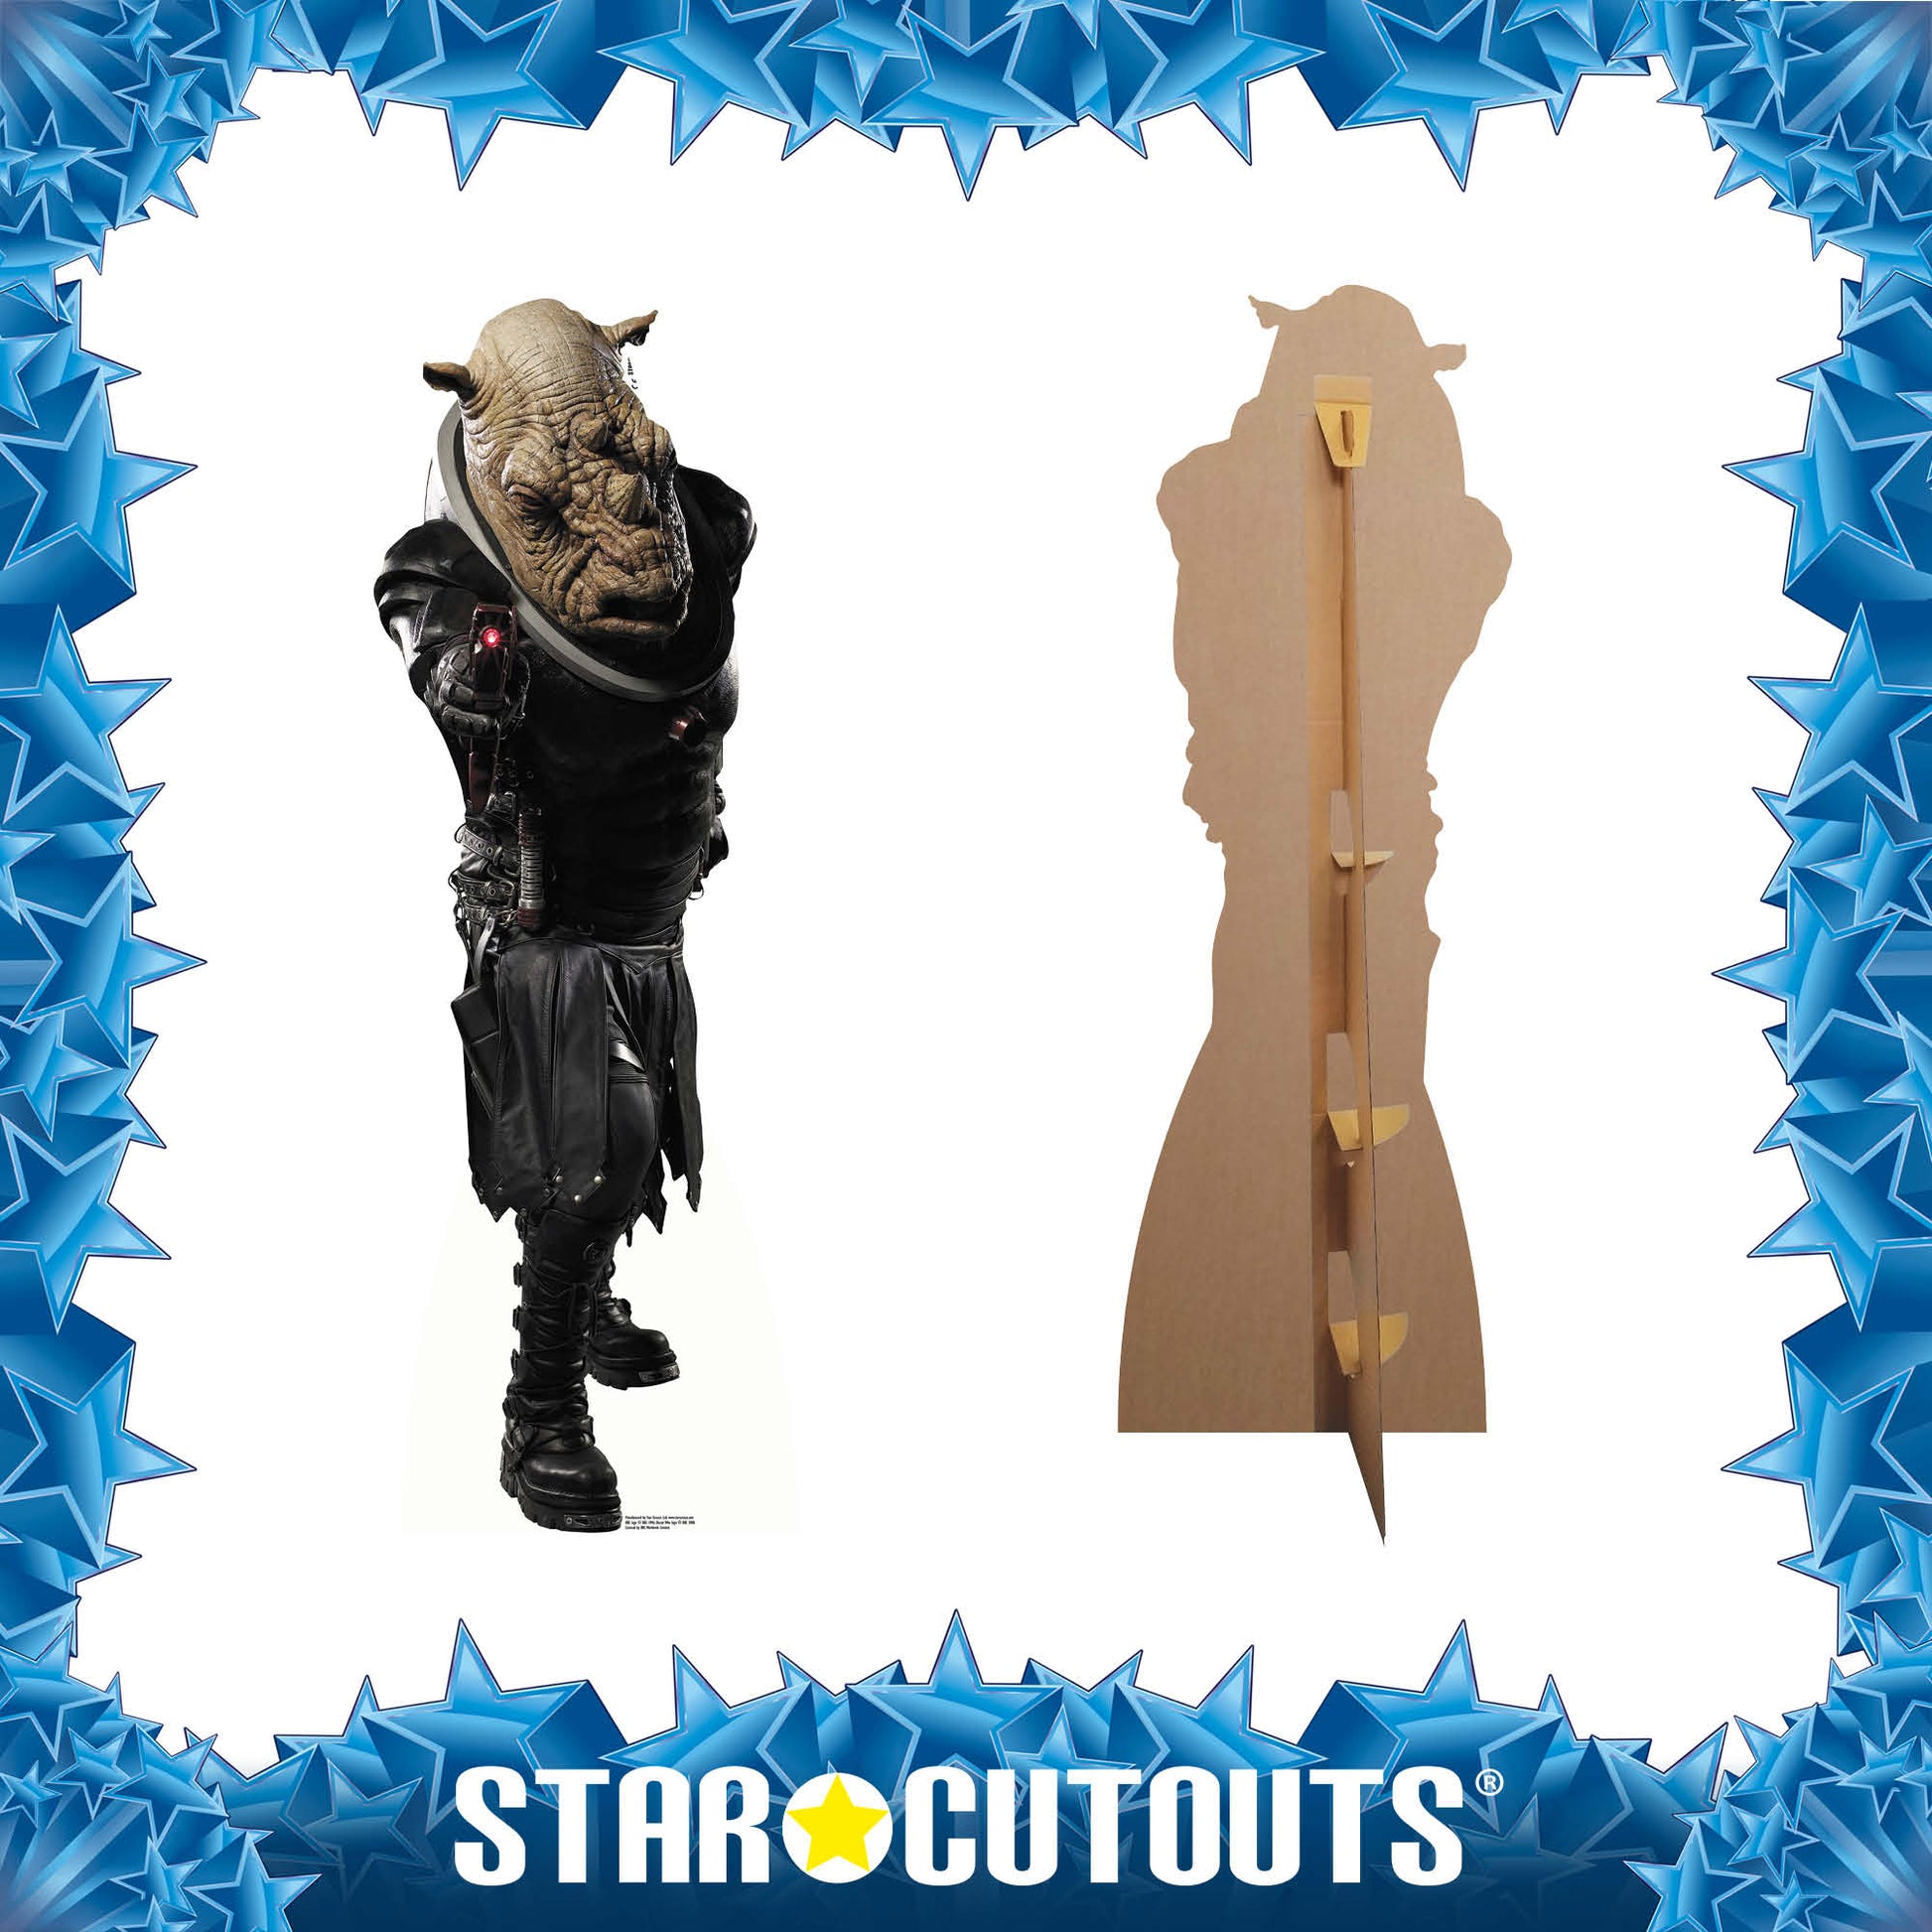 Judoon Cardboard Cut Out Height 187cm - Star Cutouts